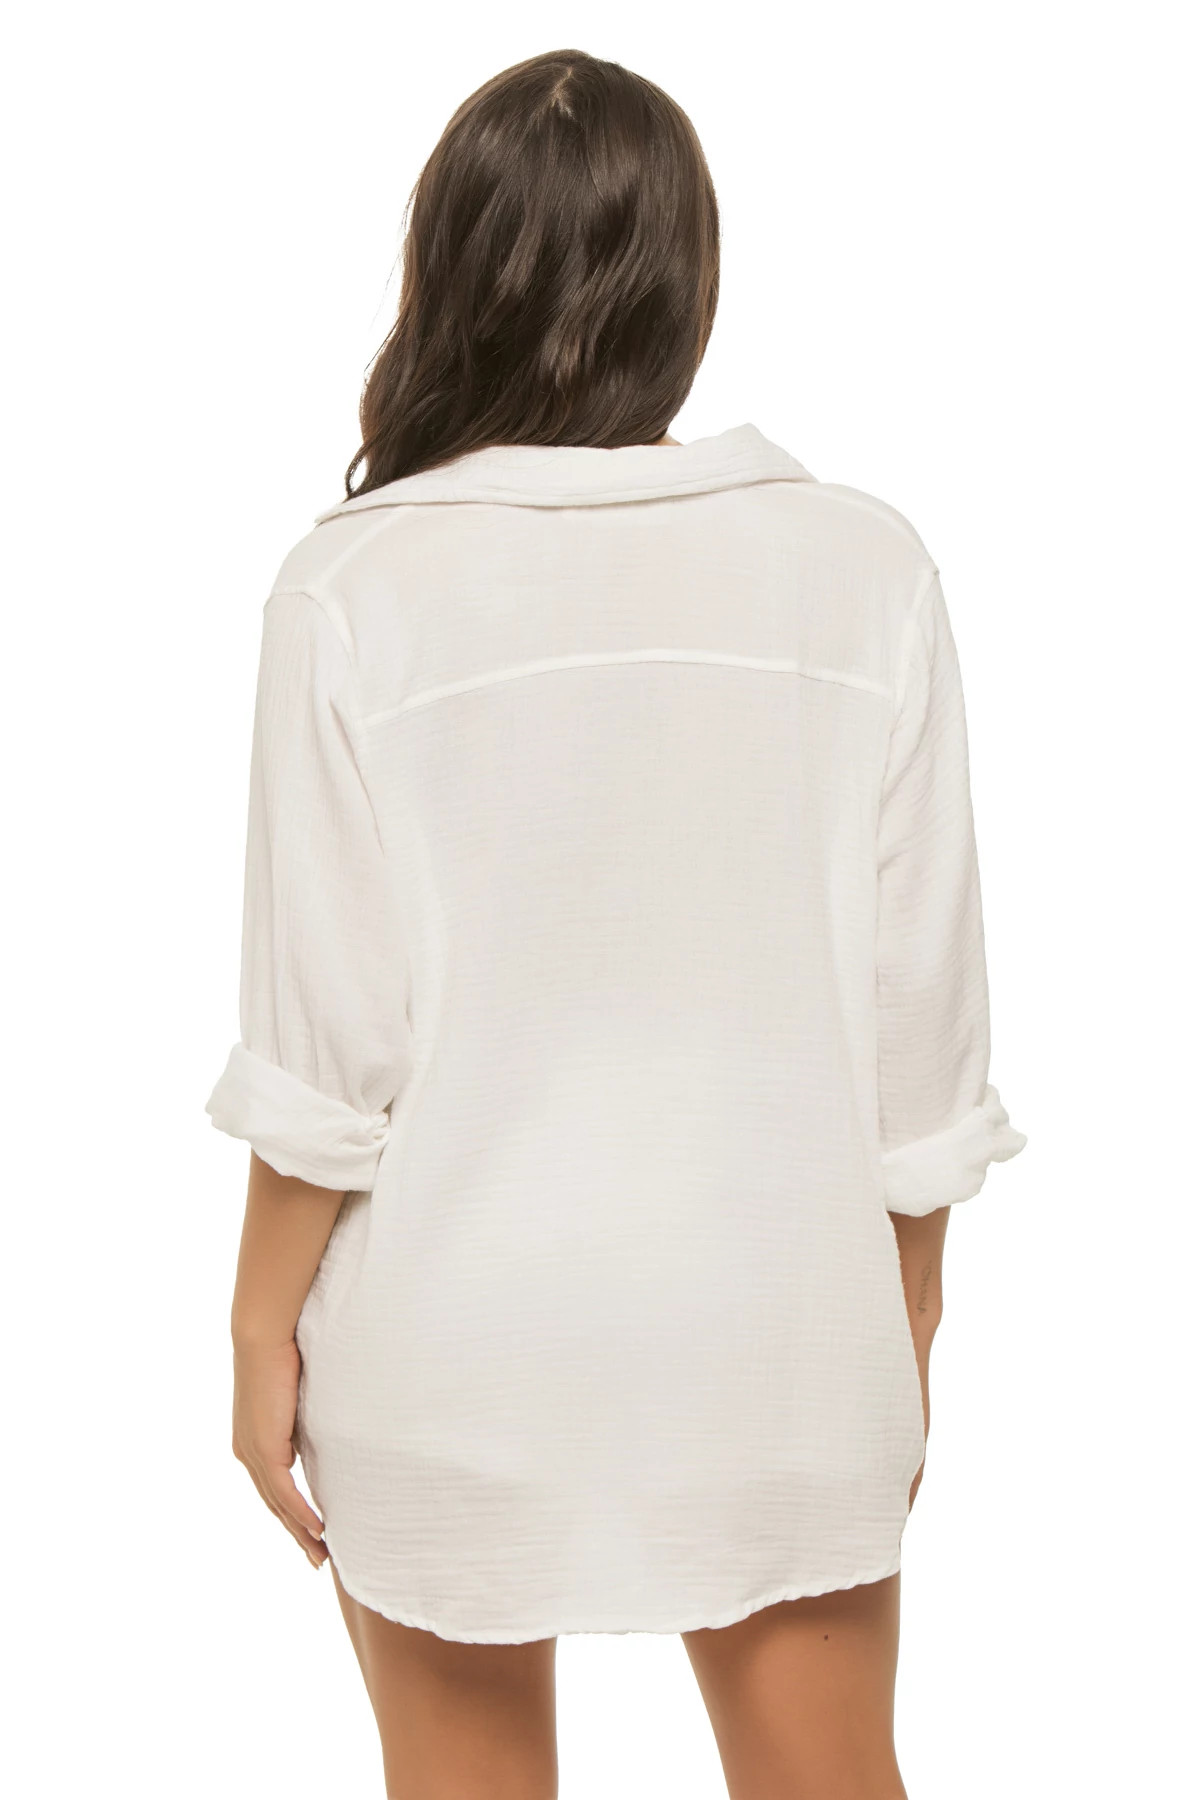 WHITE Gauze Button Up Boy Shirt image number 2